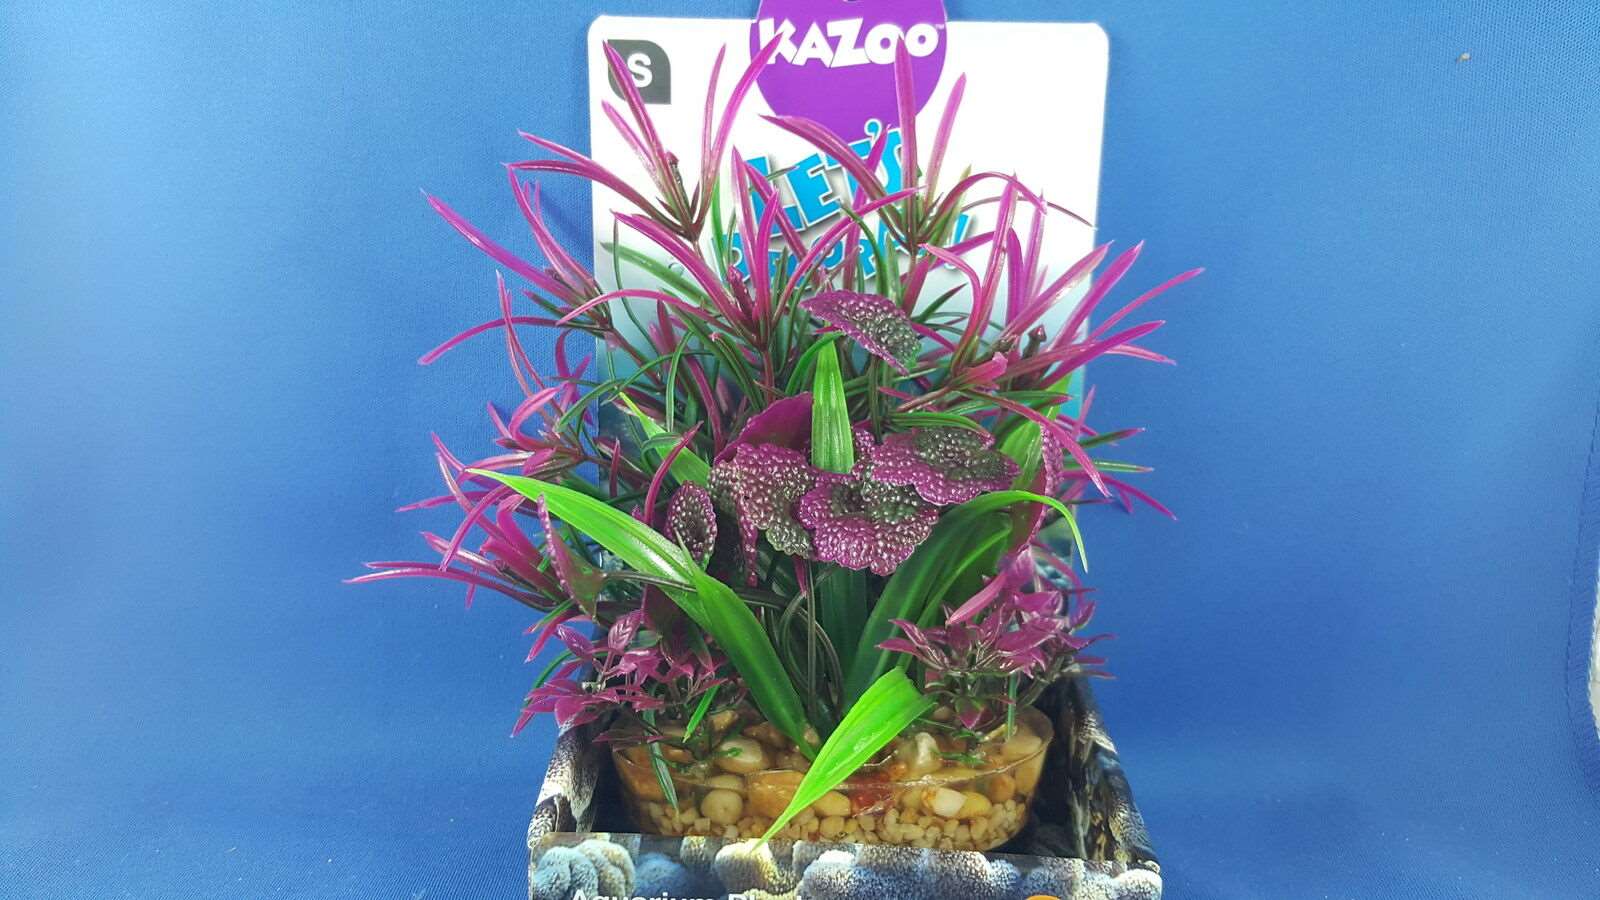 Kazoo aquarium plant, small size, purple & green leaves with solid pebble base